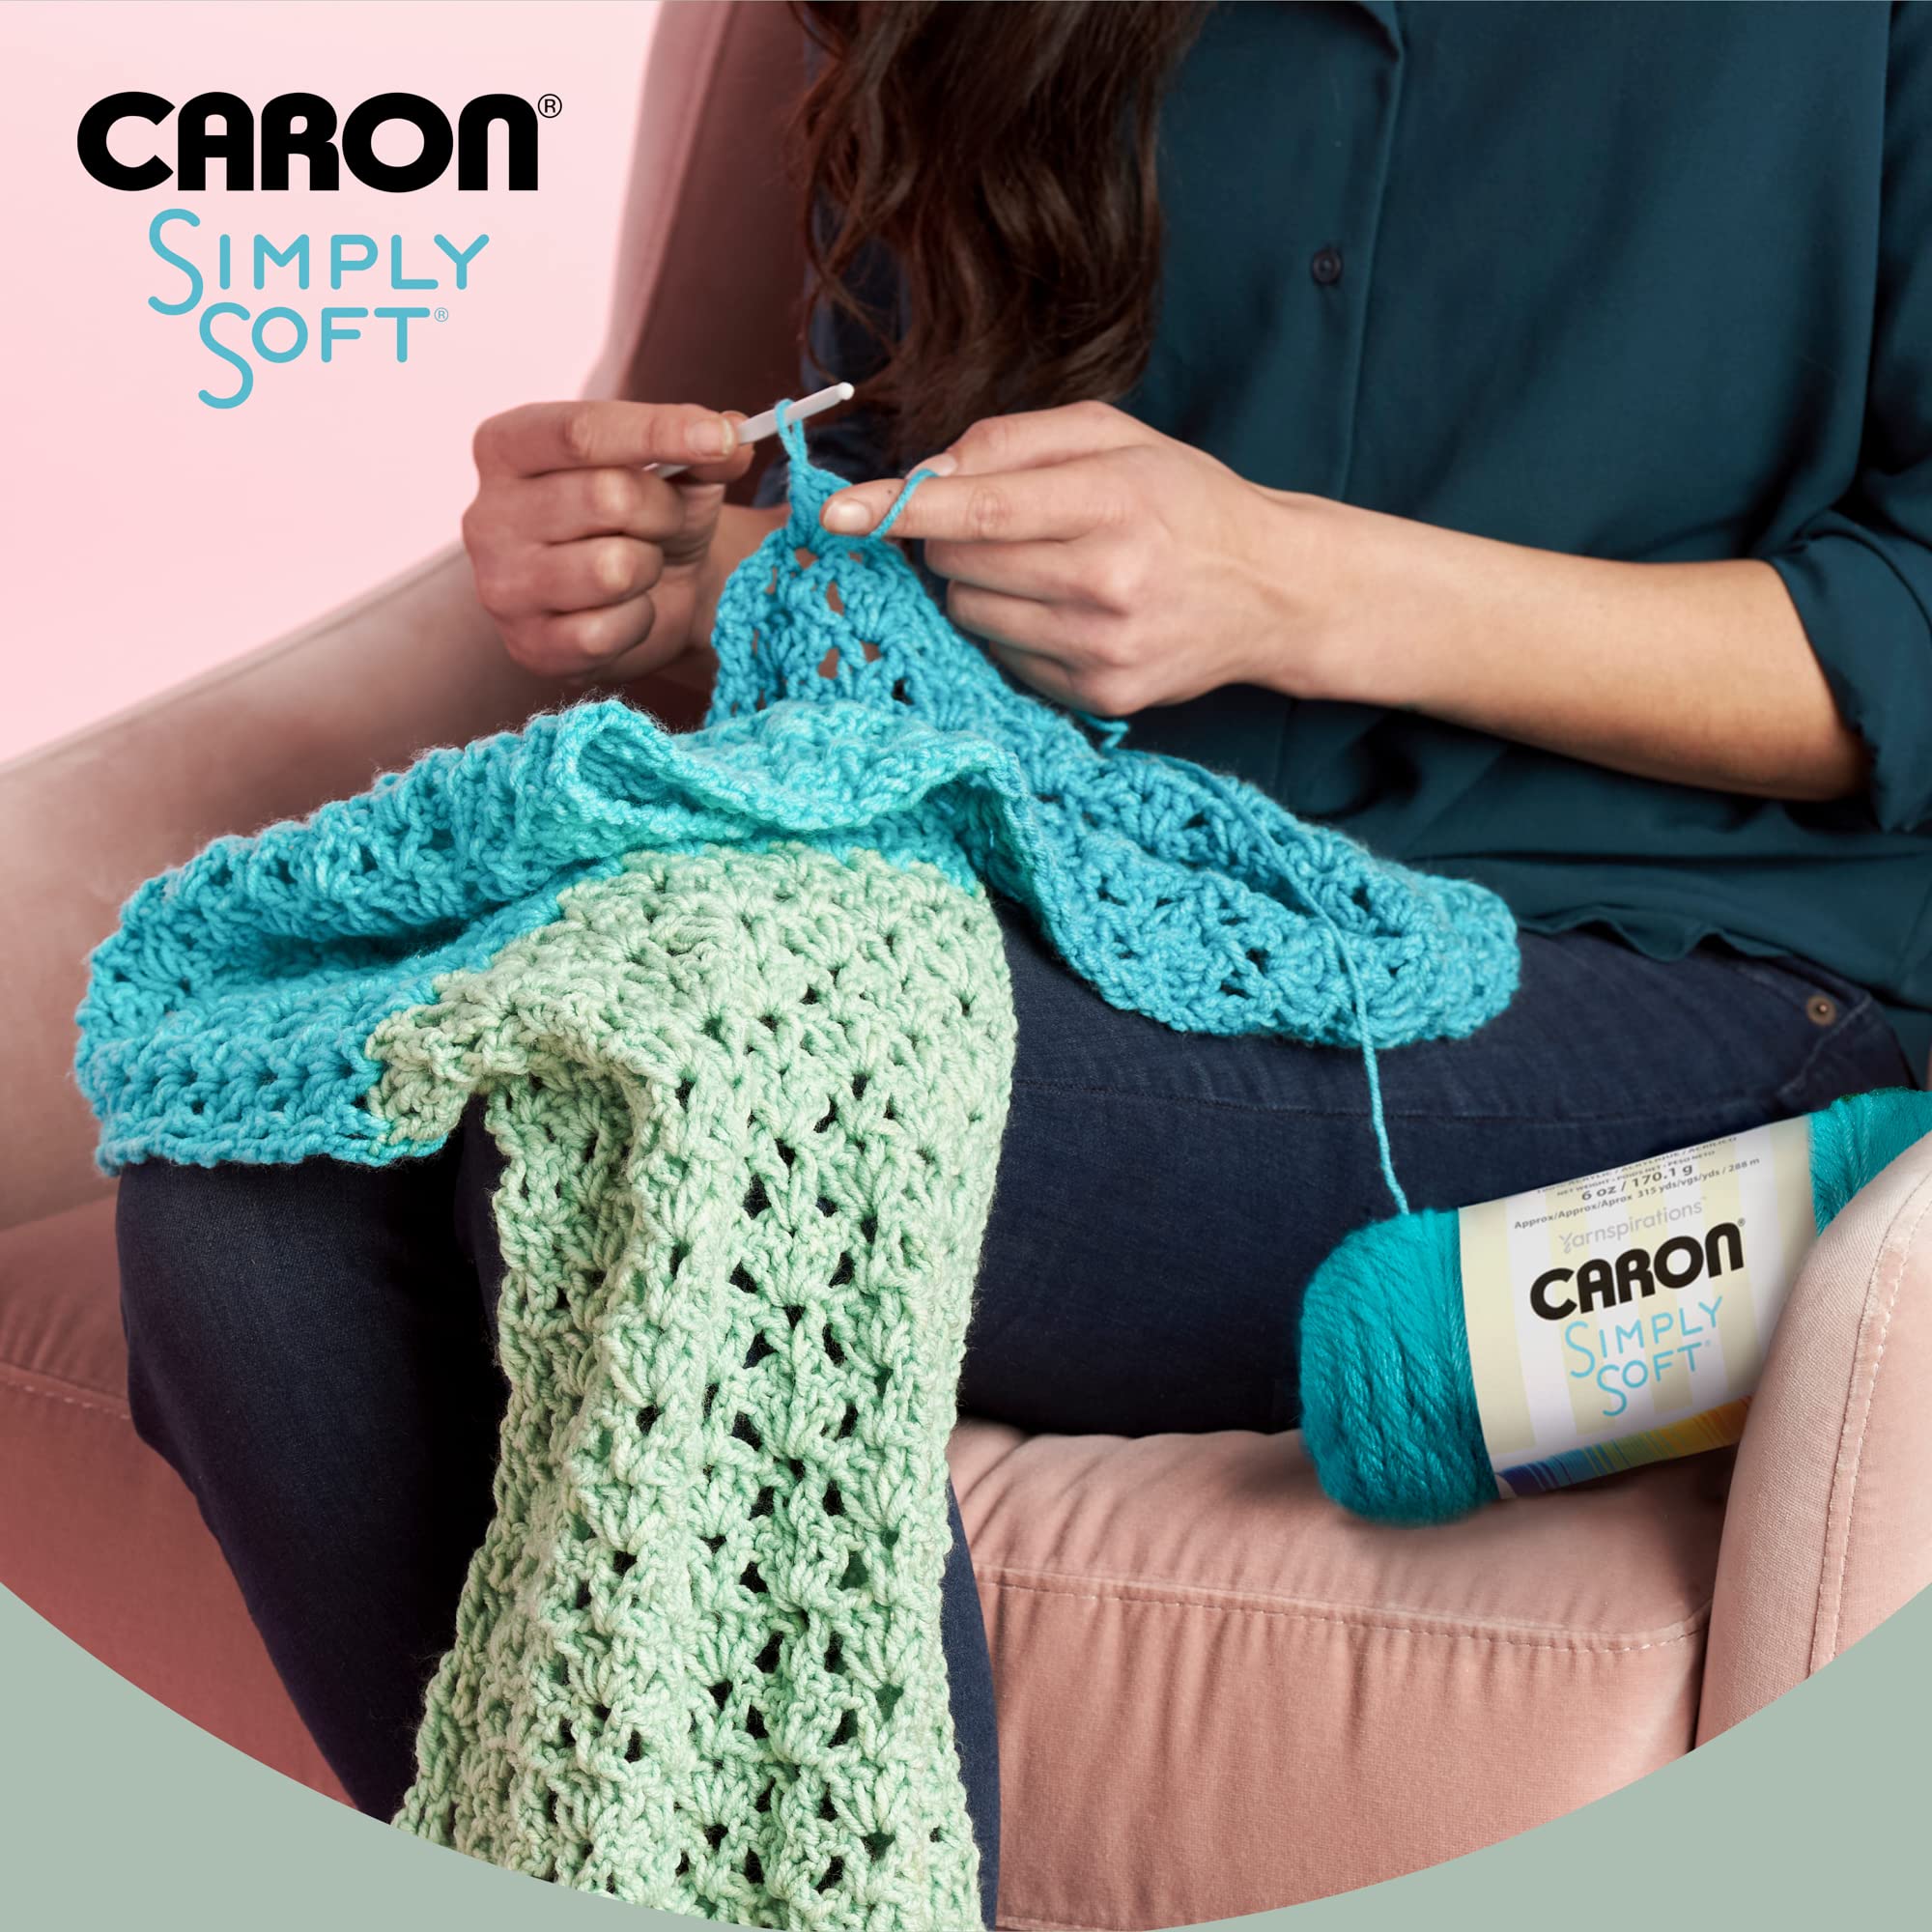 Caron Simply Soft Sage Yarn - 3 Pack of 170g/6oz - Acrylic - 4 Medium (Worsted) - 315 Yards - Knitting/Crochet